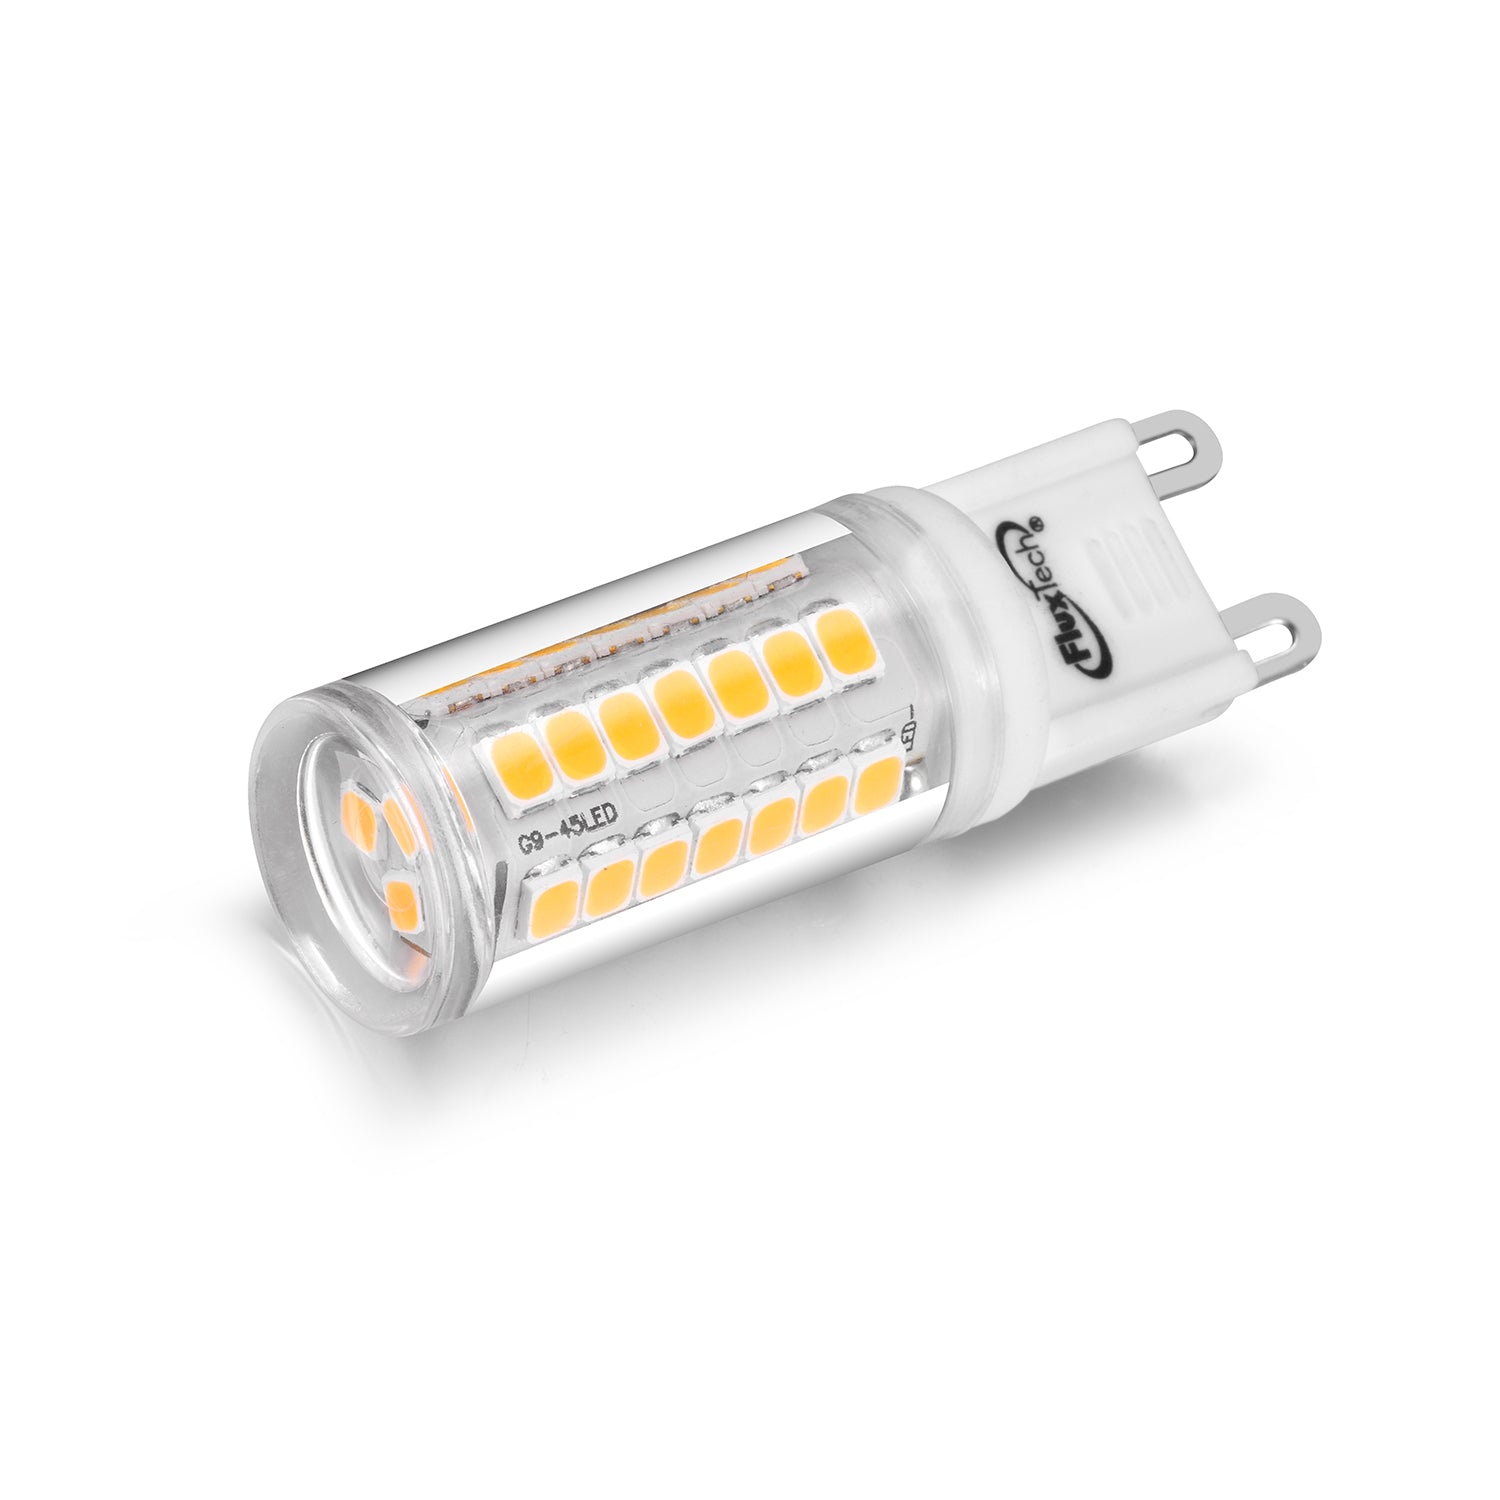 FluxTech - New Smart Dimmable Technology - G9 LED Bulb